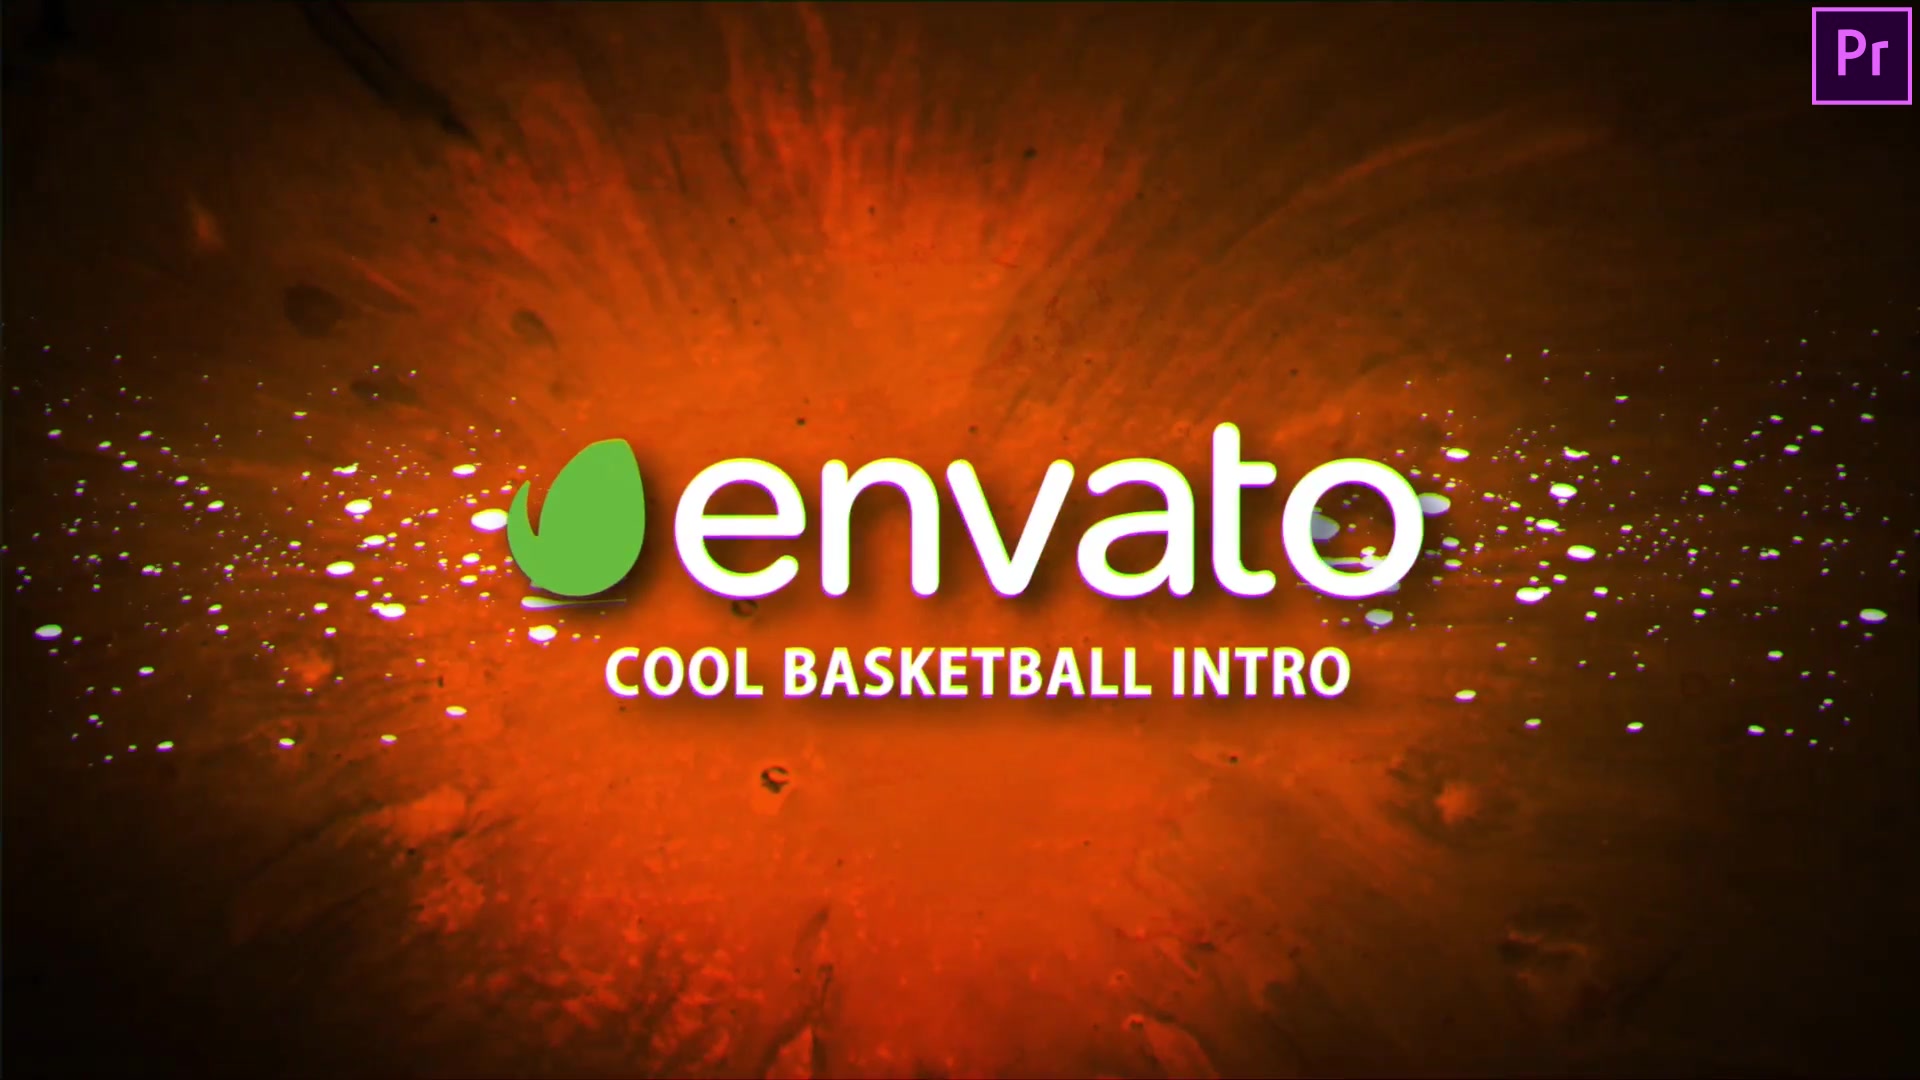 Cool Basketball Intro Basketball Promo Premiere Pro Videohive 34333174 Premiere Pro Image 4